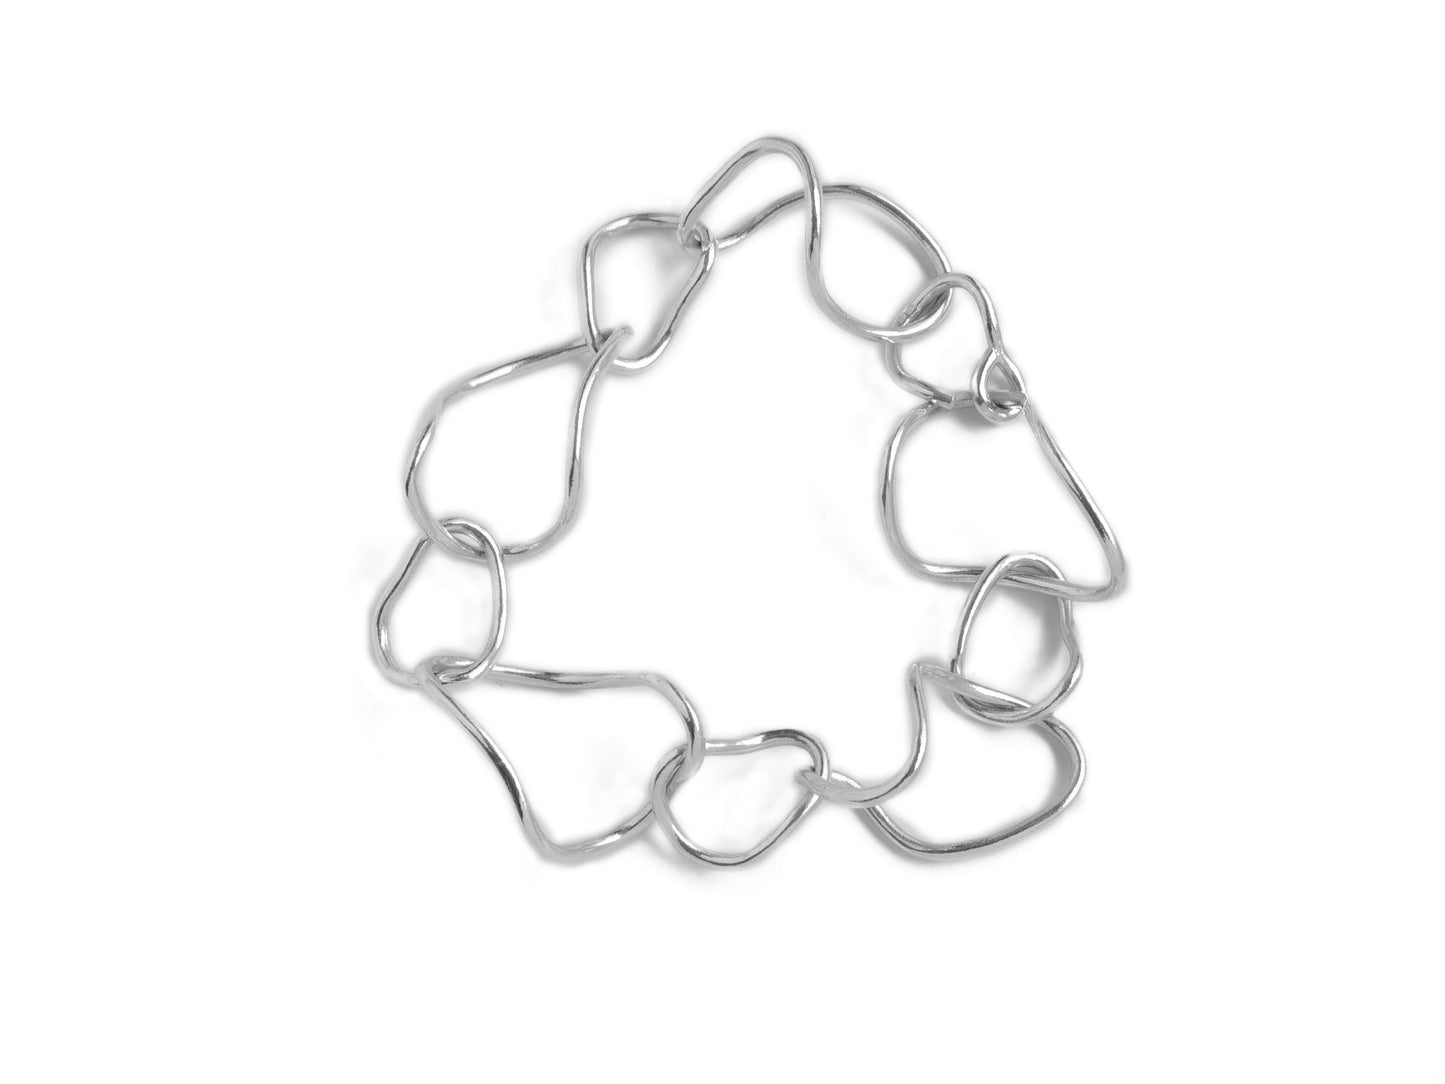 Organic link silver chain bracelet